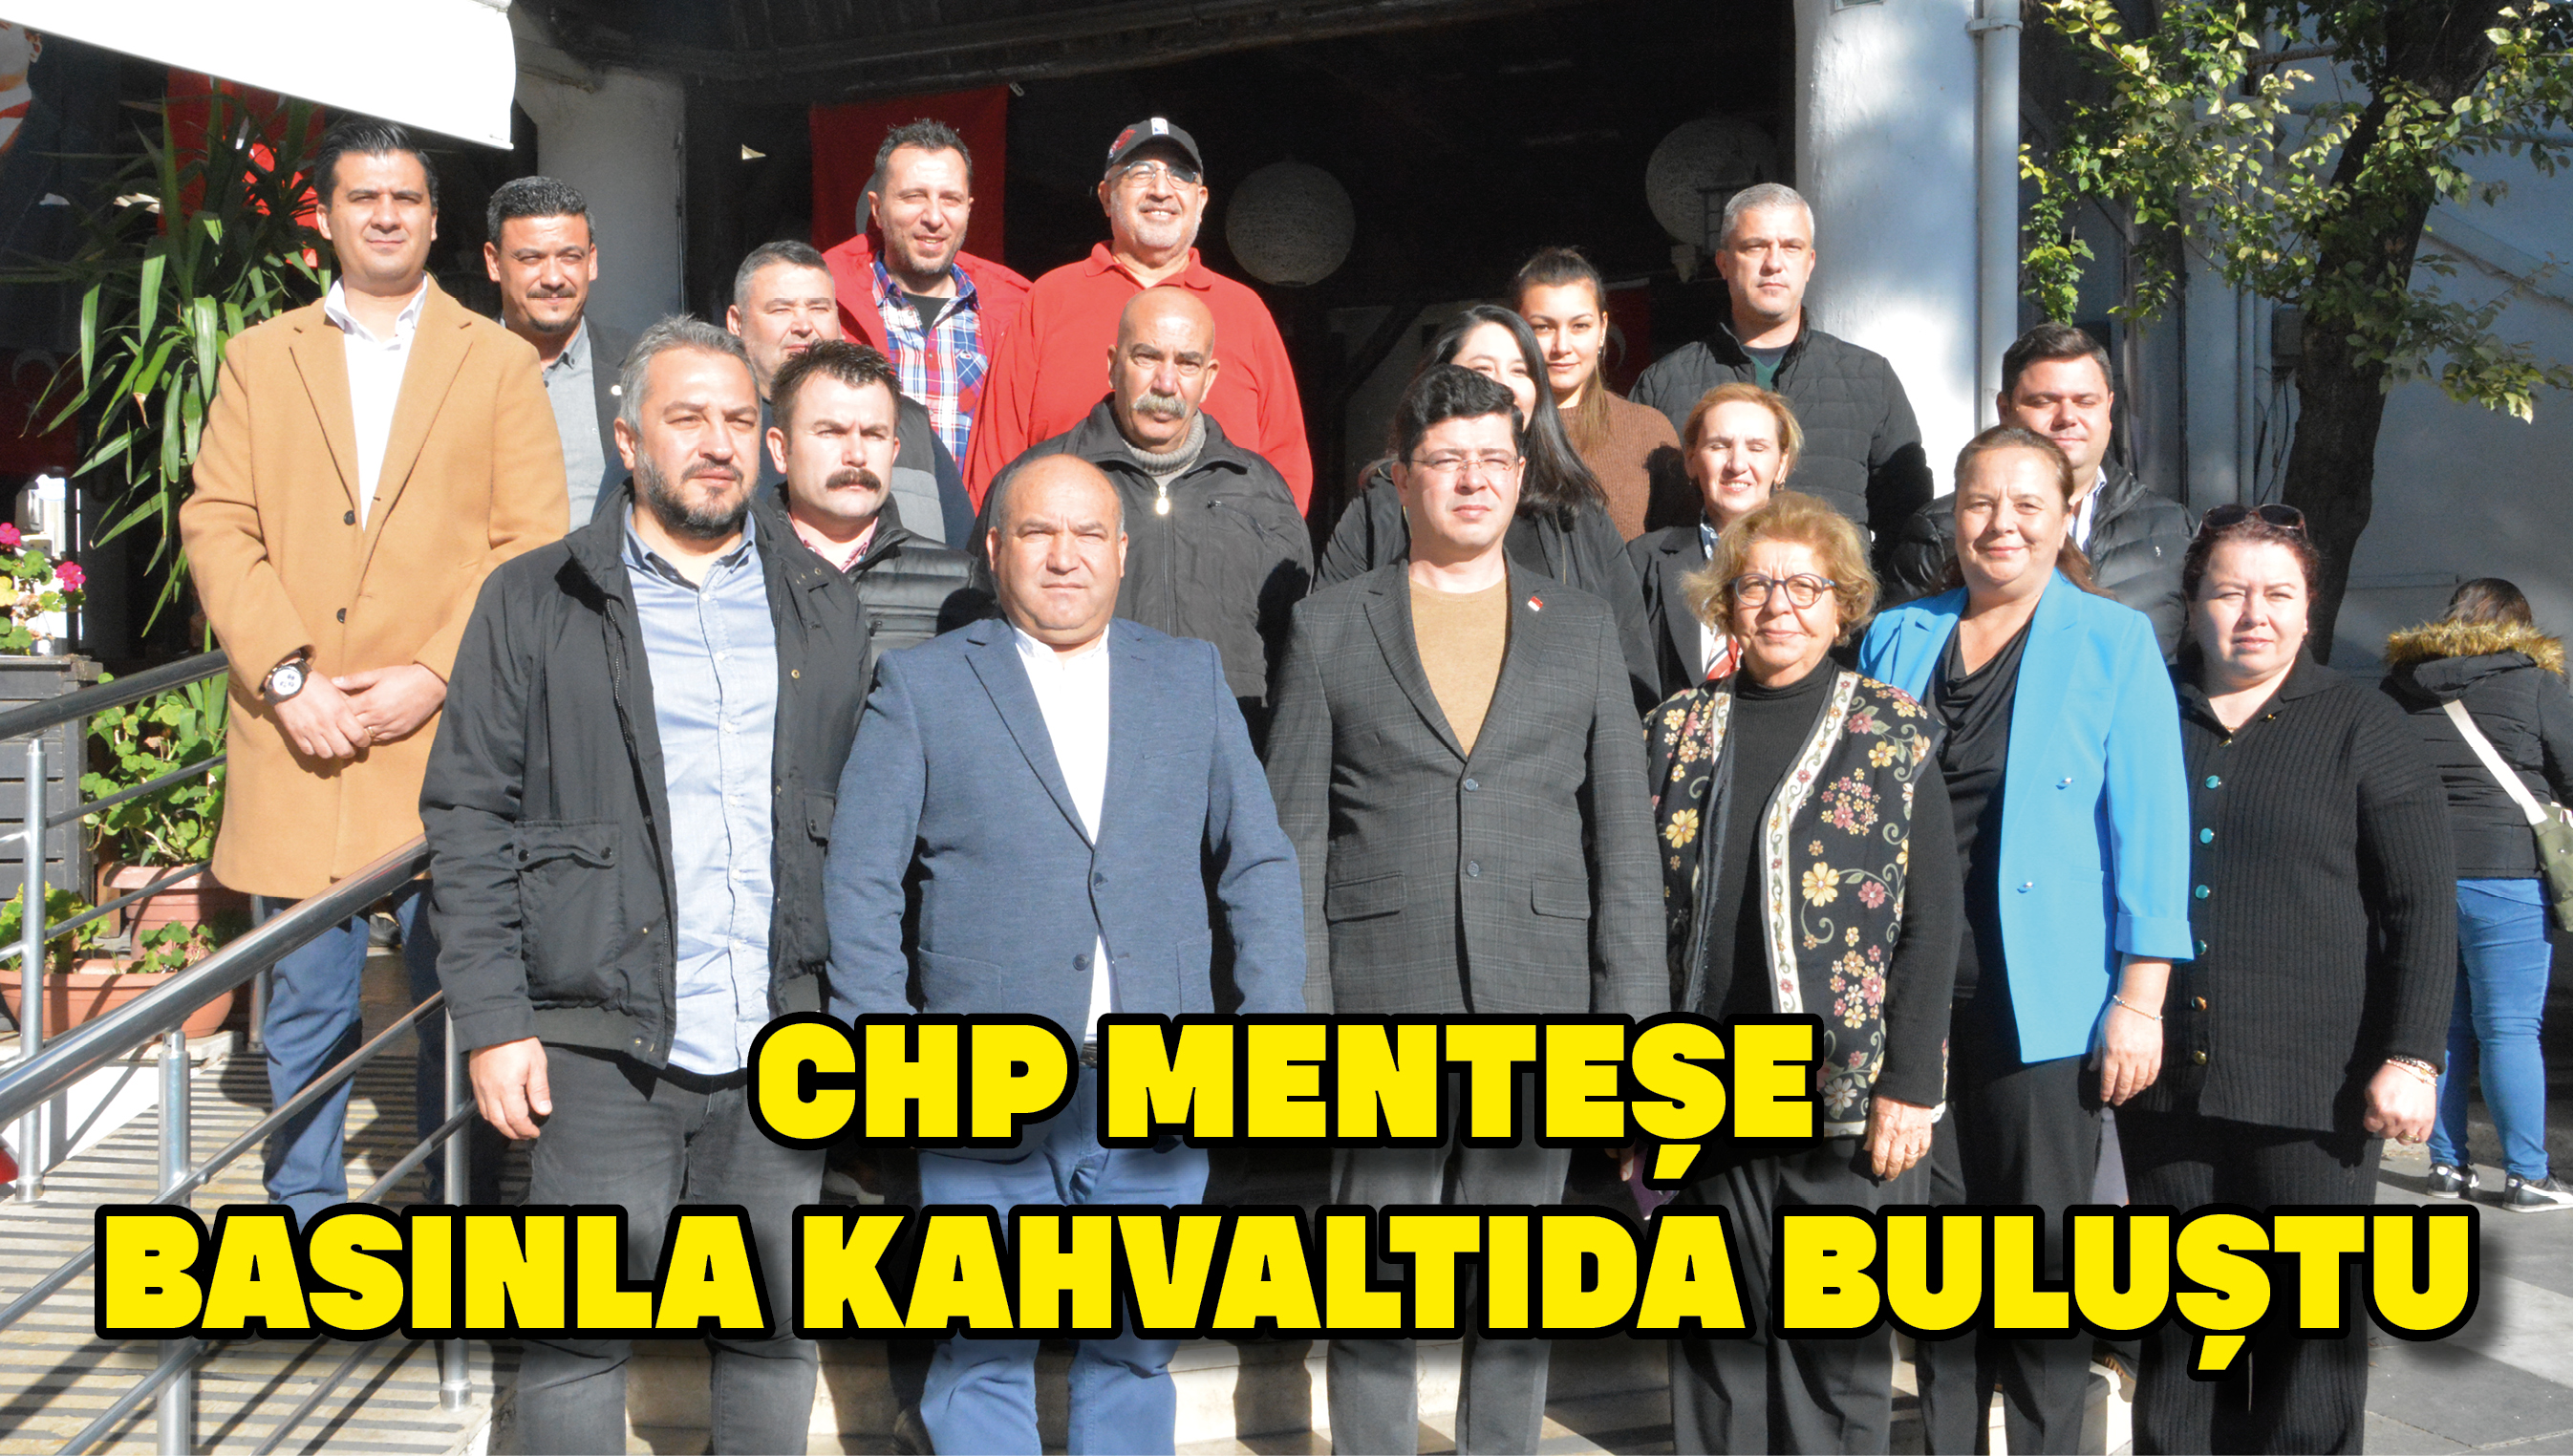 CHP MENTEŞE BASINLA KAHVALTIDA BULUŞTU